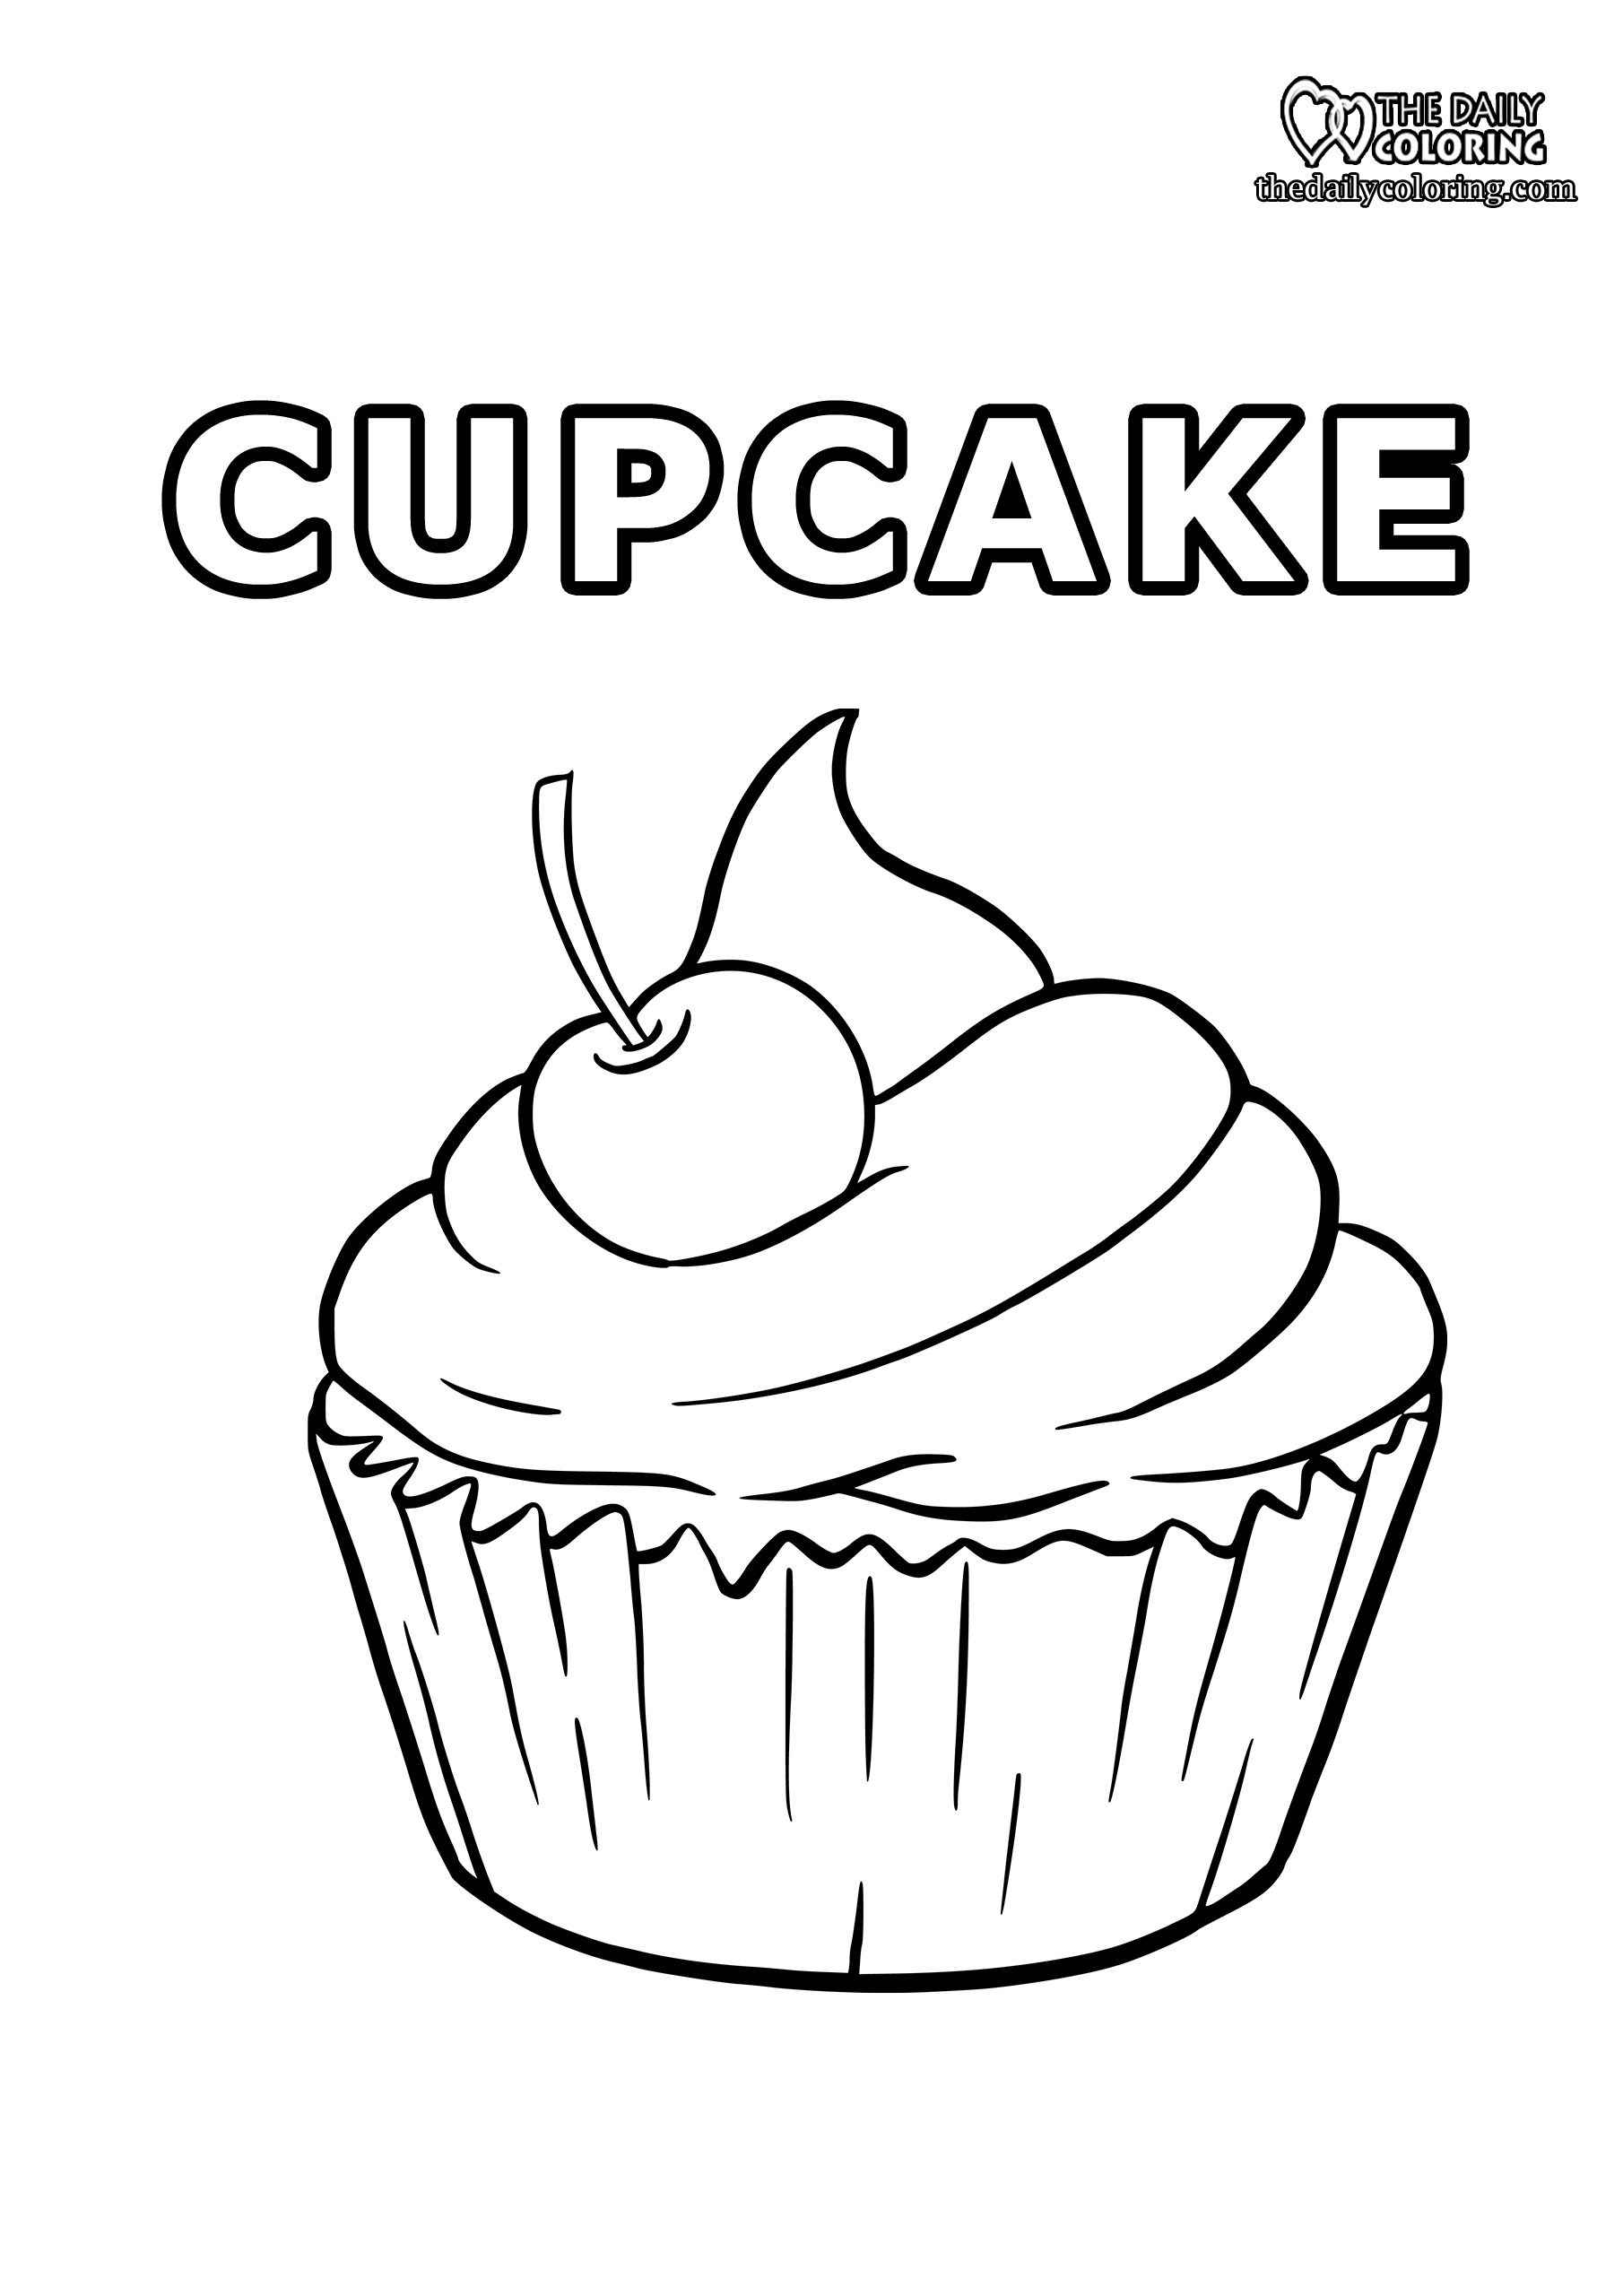 cupcake-coloring-page